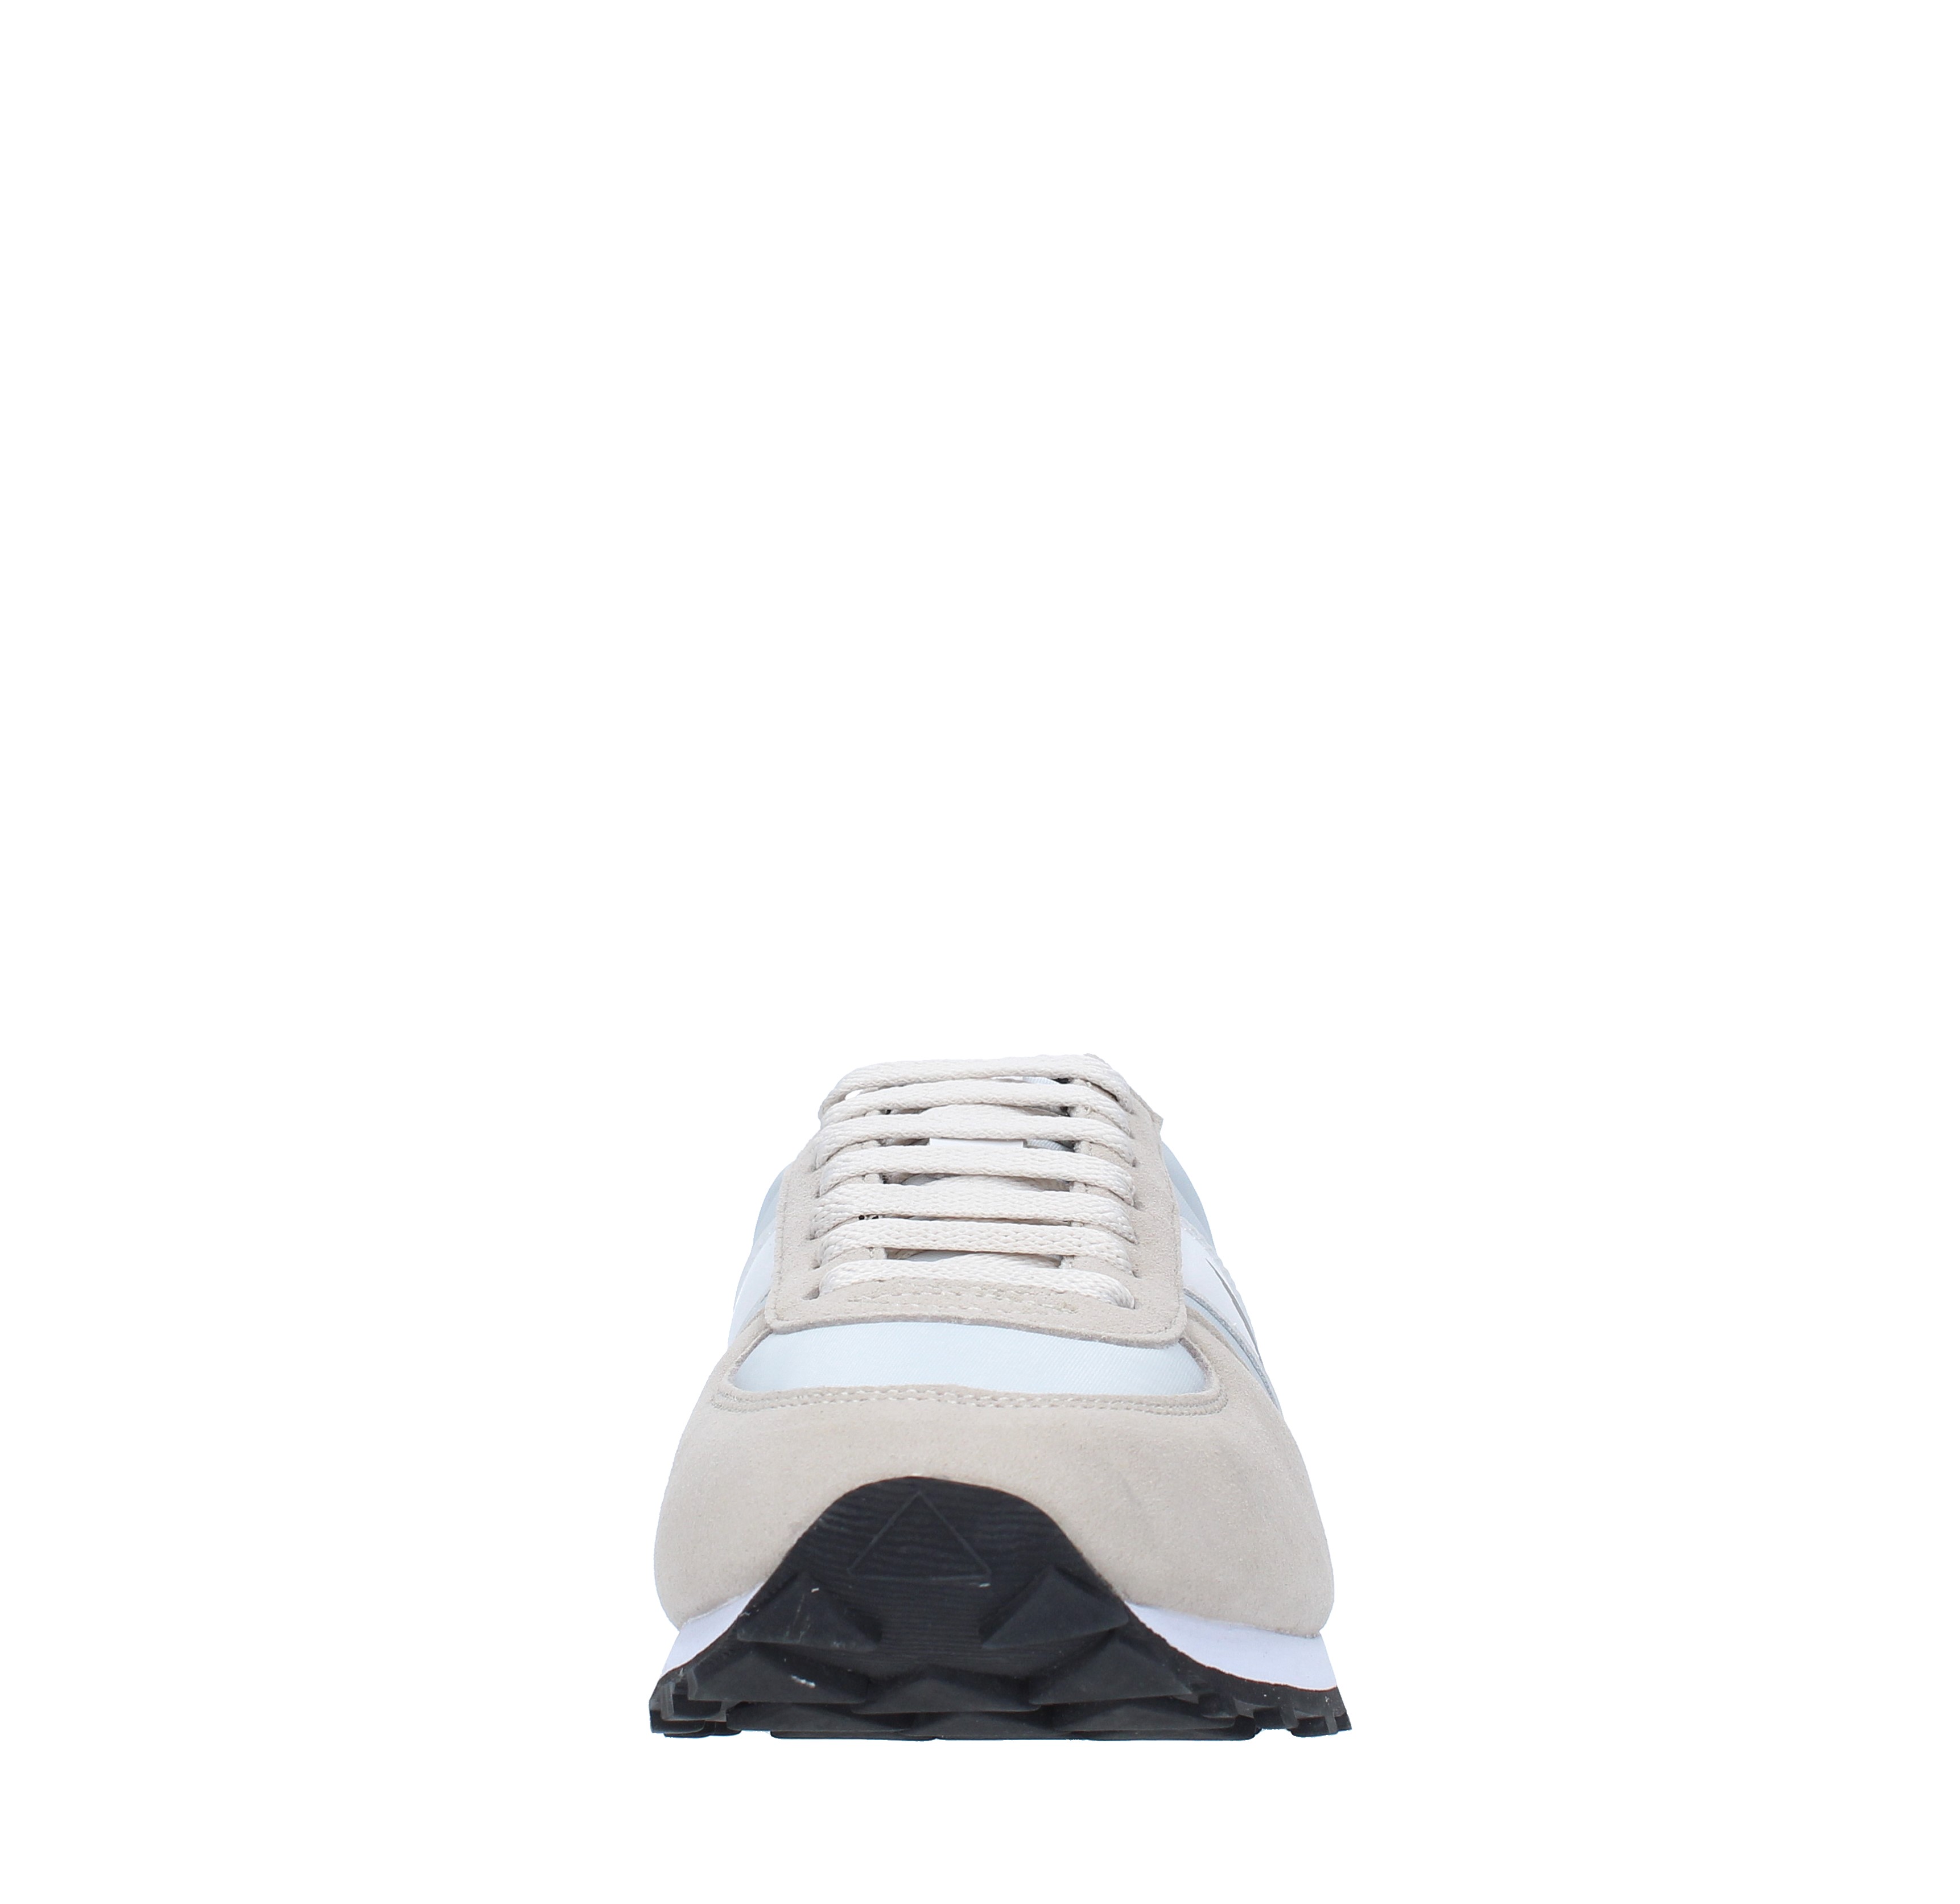 Suede and fabric sneakers - AERONAUTICA MILITARE - Ginevra calzature